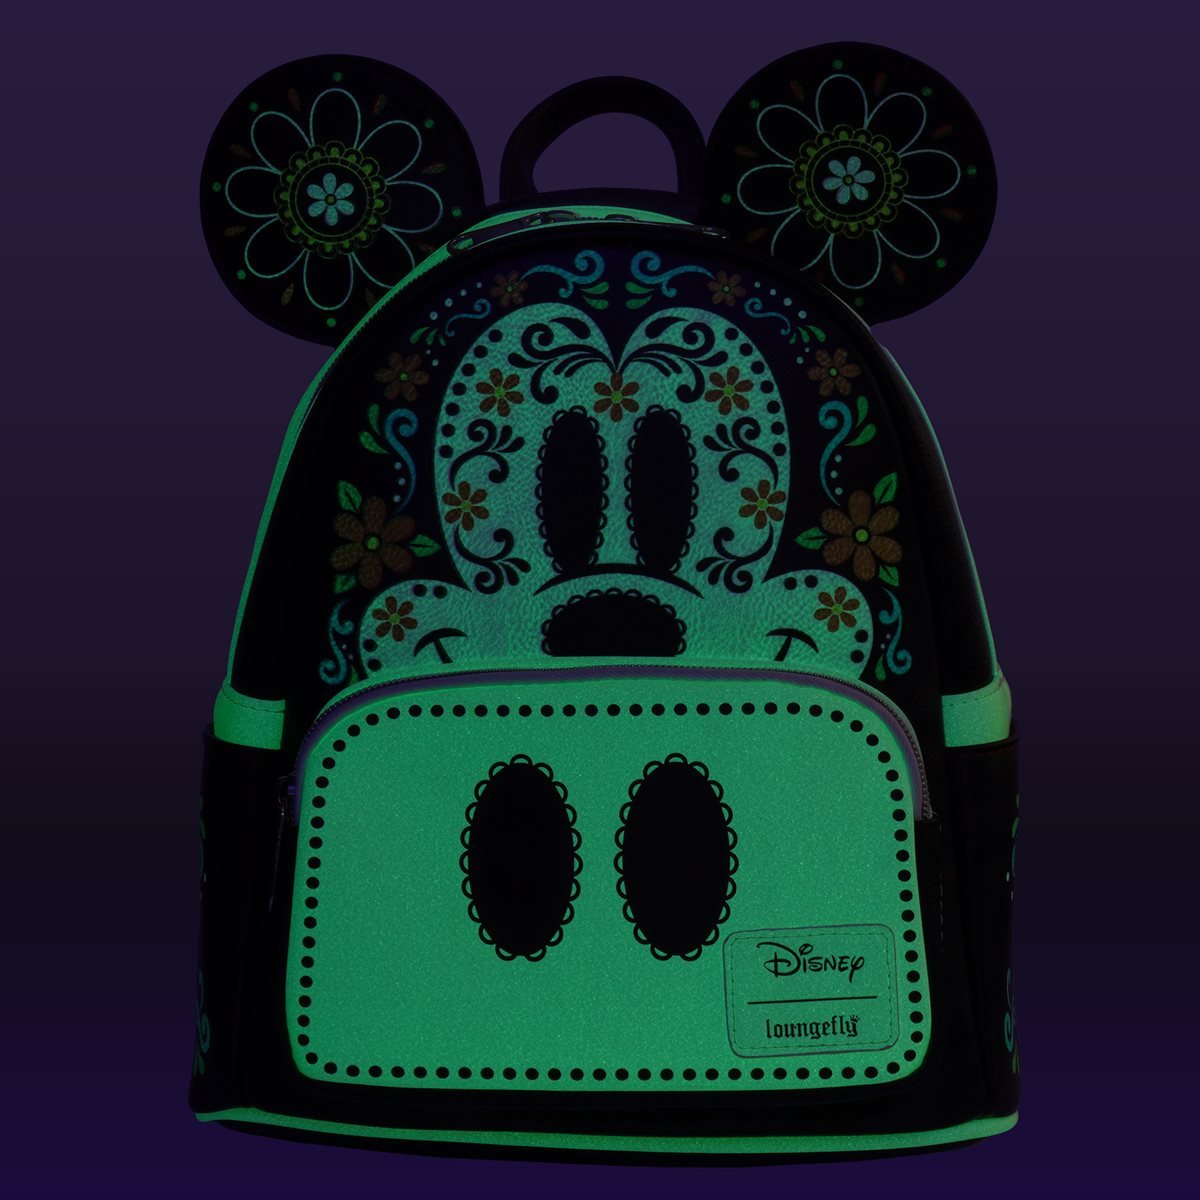 671803441897 - Loungefly Disney Mickey Mouse Dia de los Muertos Sugar Skull Mini Backpack - Entertainment Earth Ex - Glow in the Dark